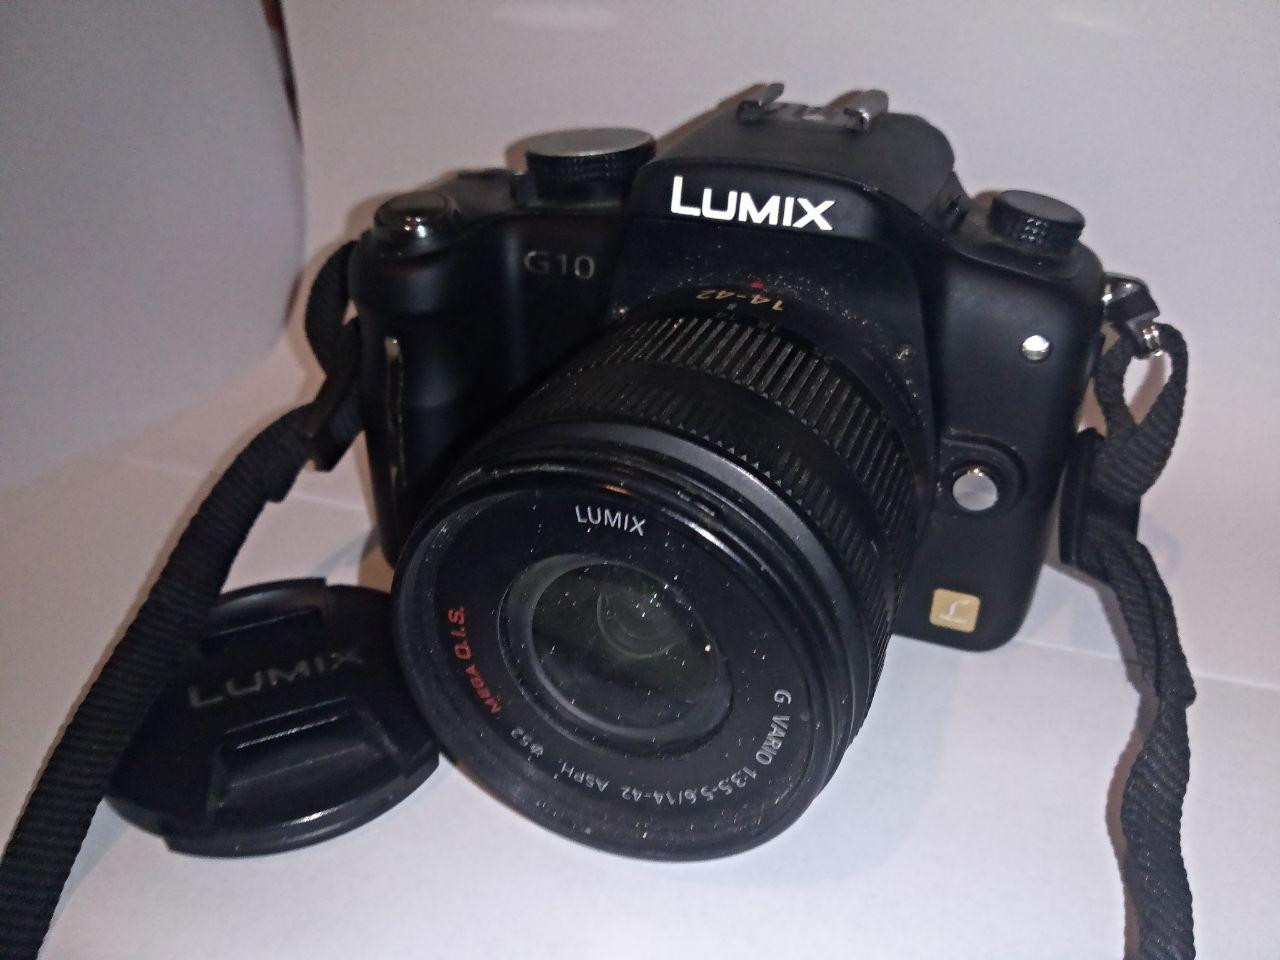 camaras y audio - Camara profesional Panasonic lumix g10